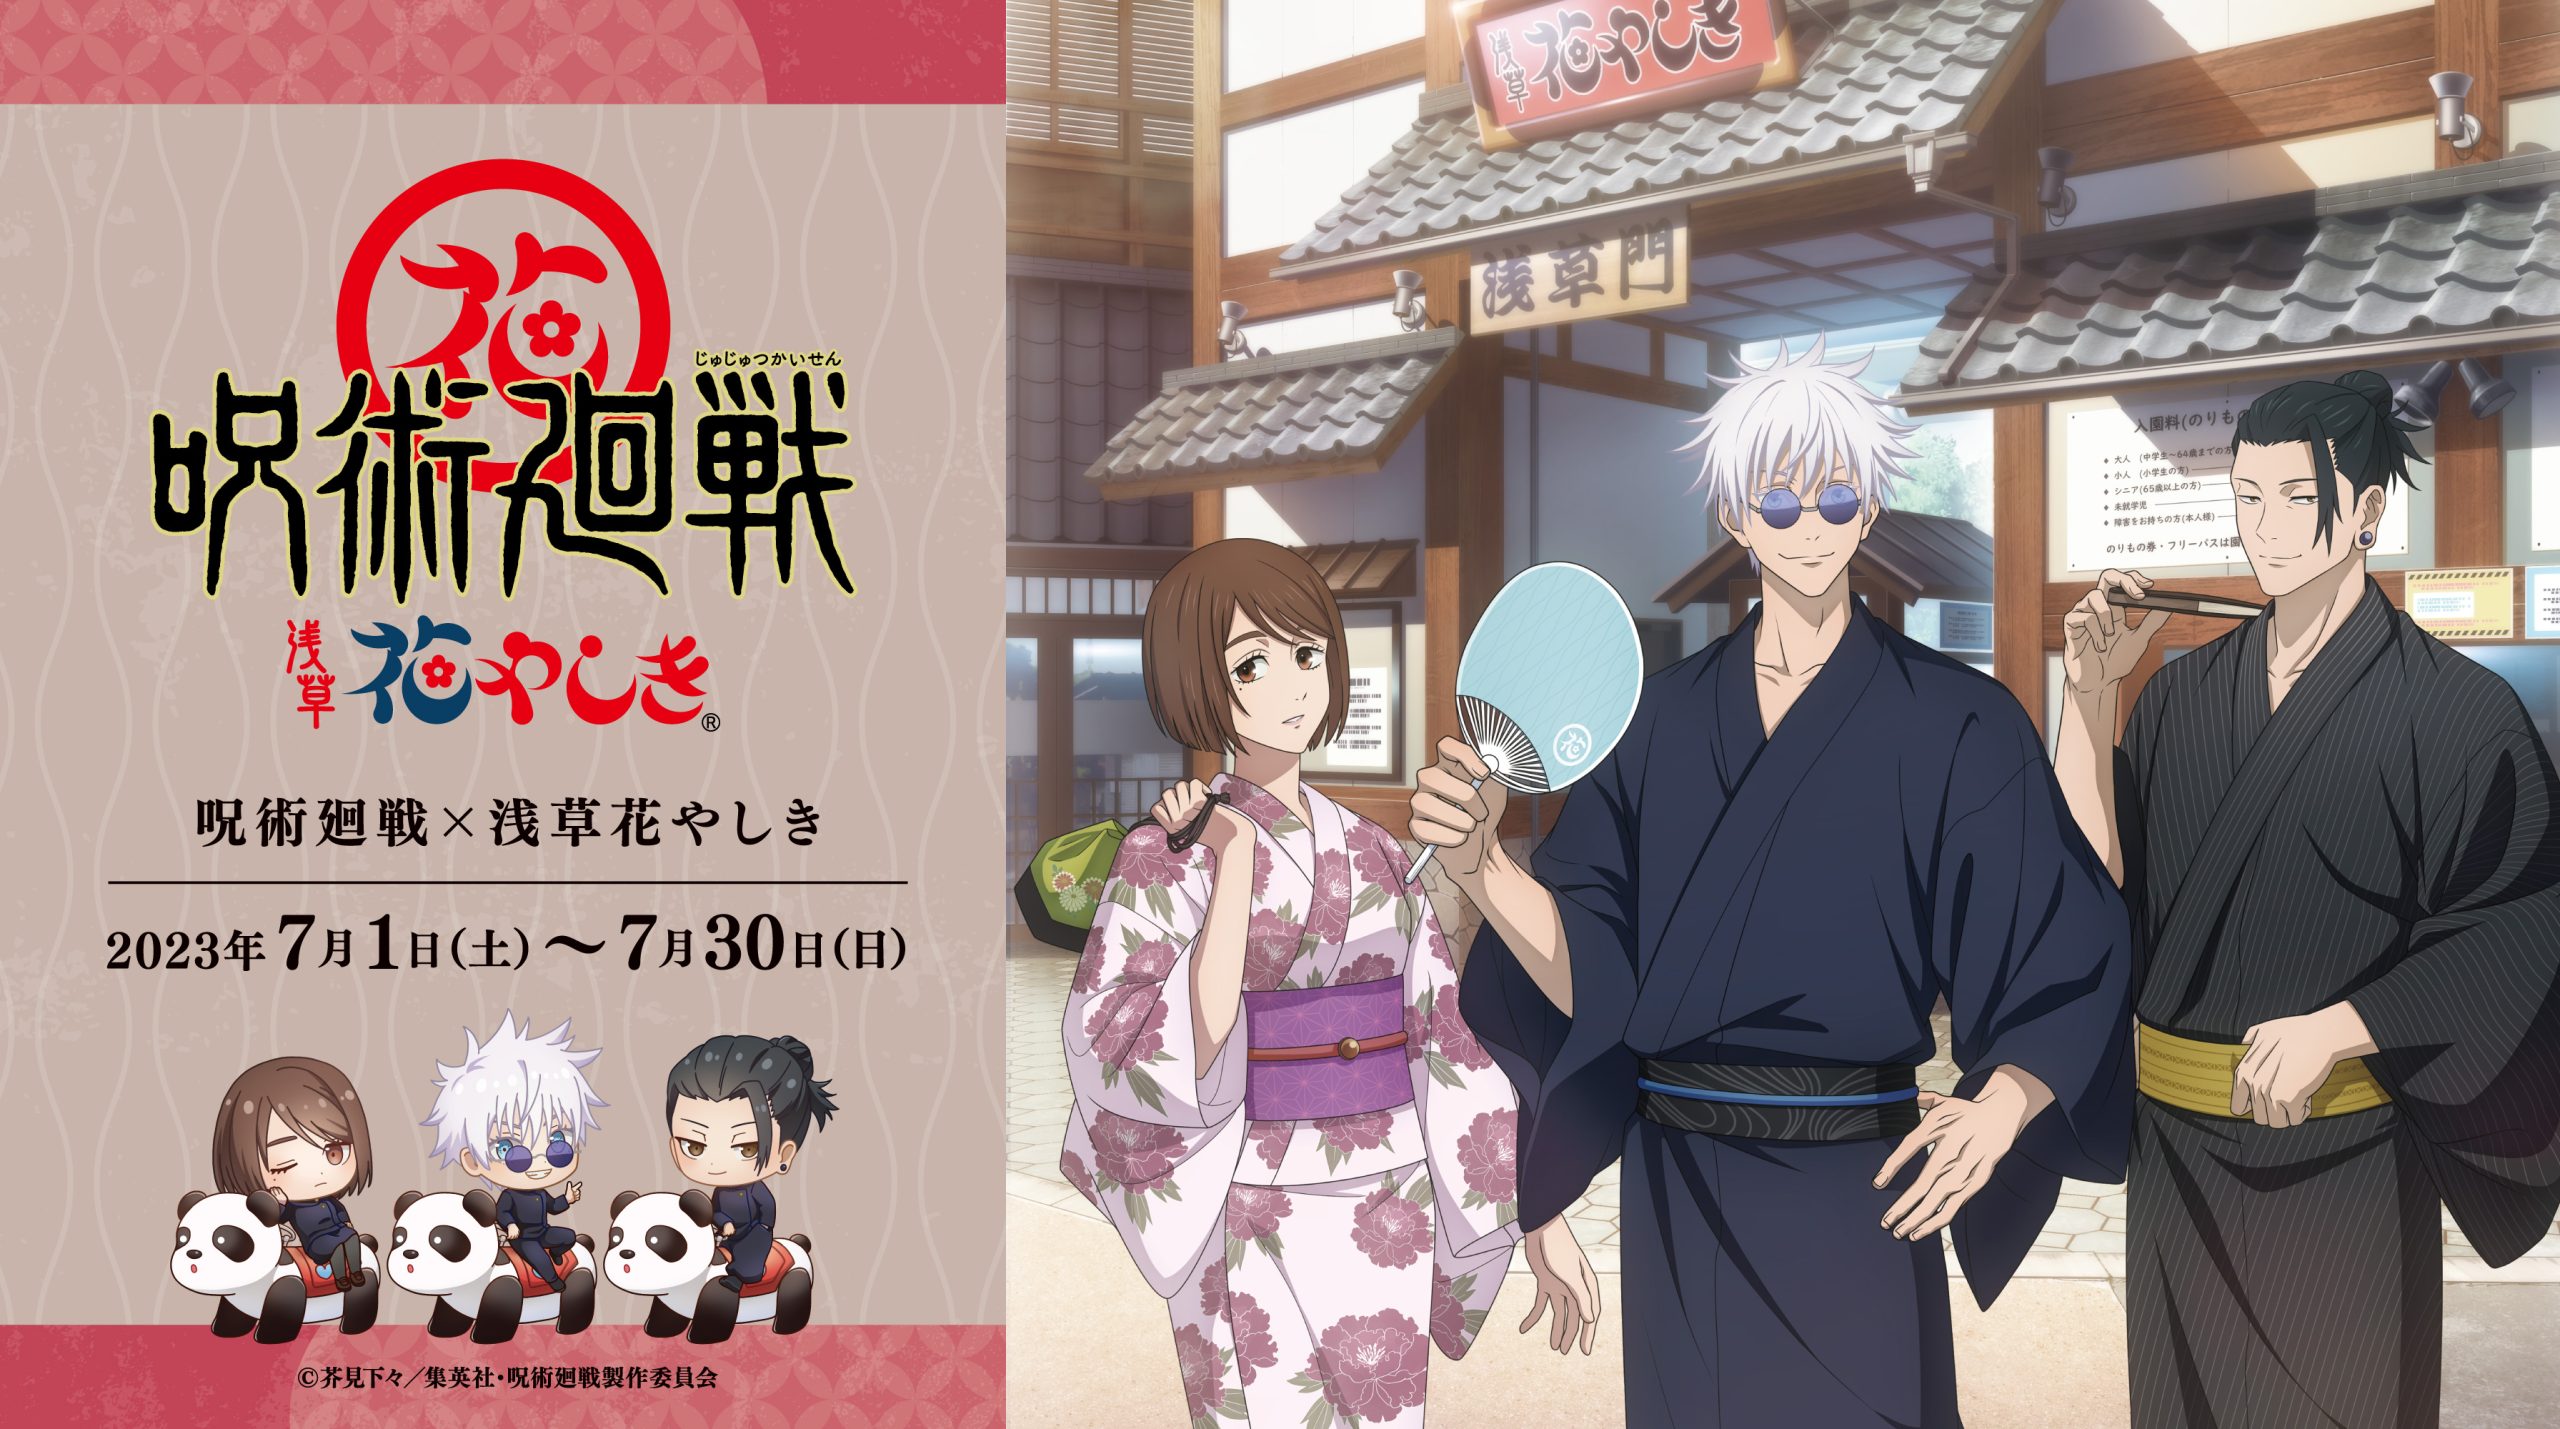 TVアニメ「呪術廻戦」と「浅草花やしき」のコラボレーションイベントが開催決定！